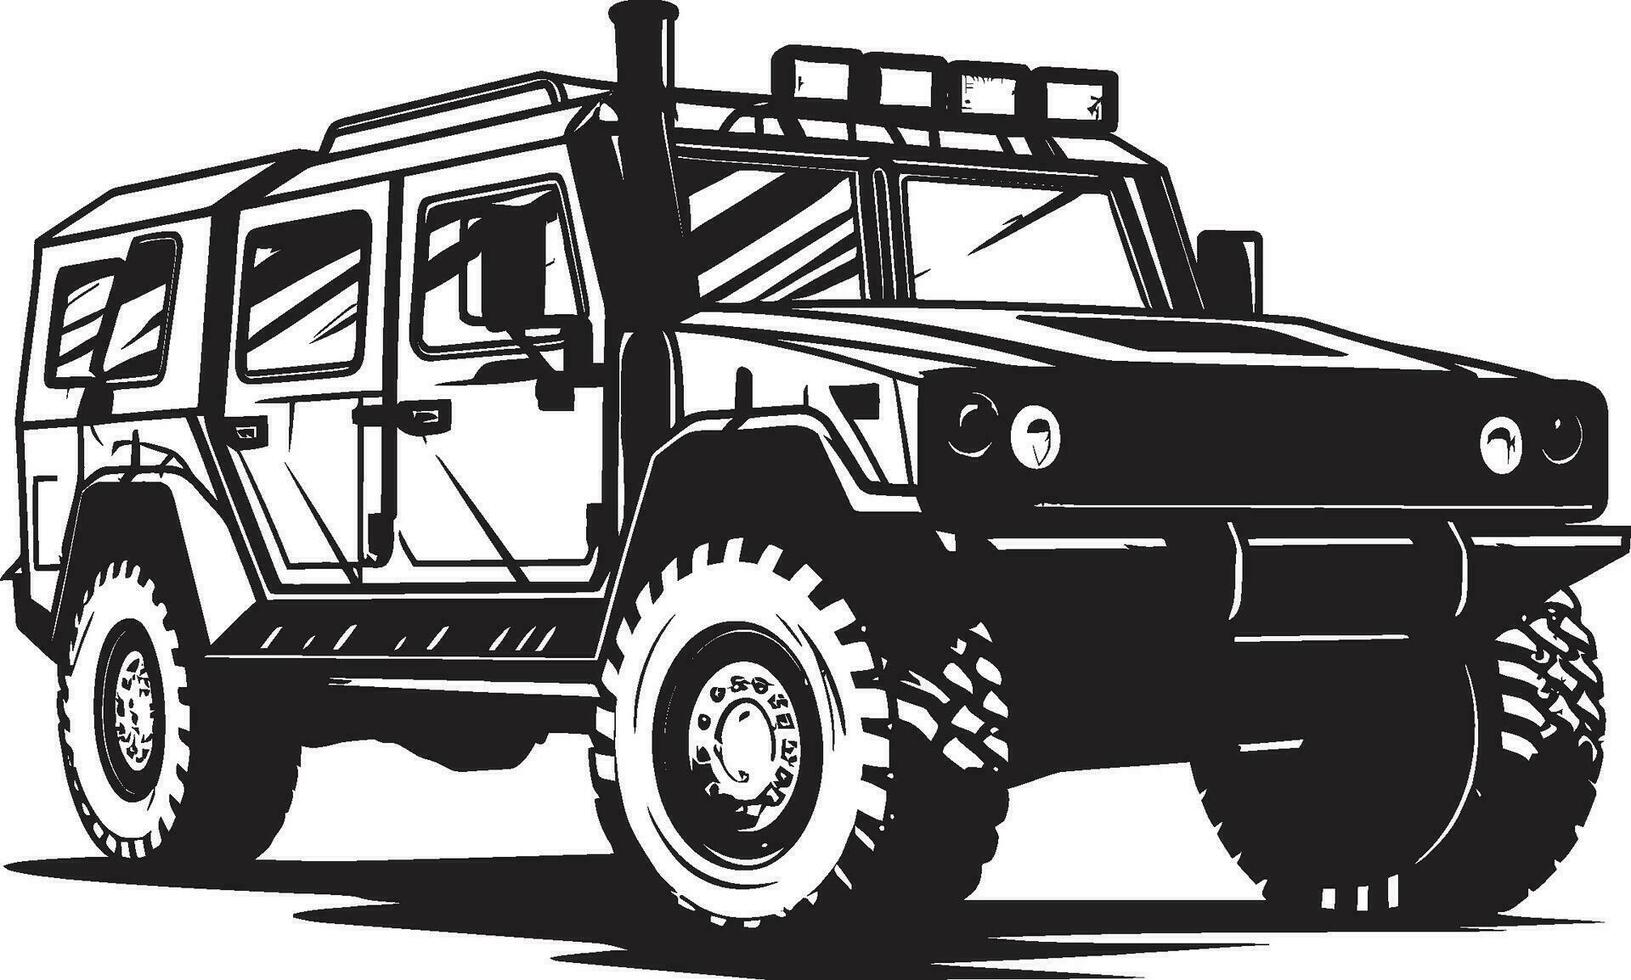 Combat Cruiser Army Vehicle Vector Logo Tactical Transport Black Iconic 4x4 Emblem